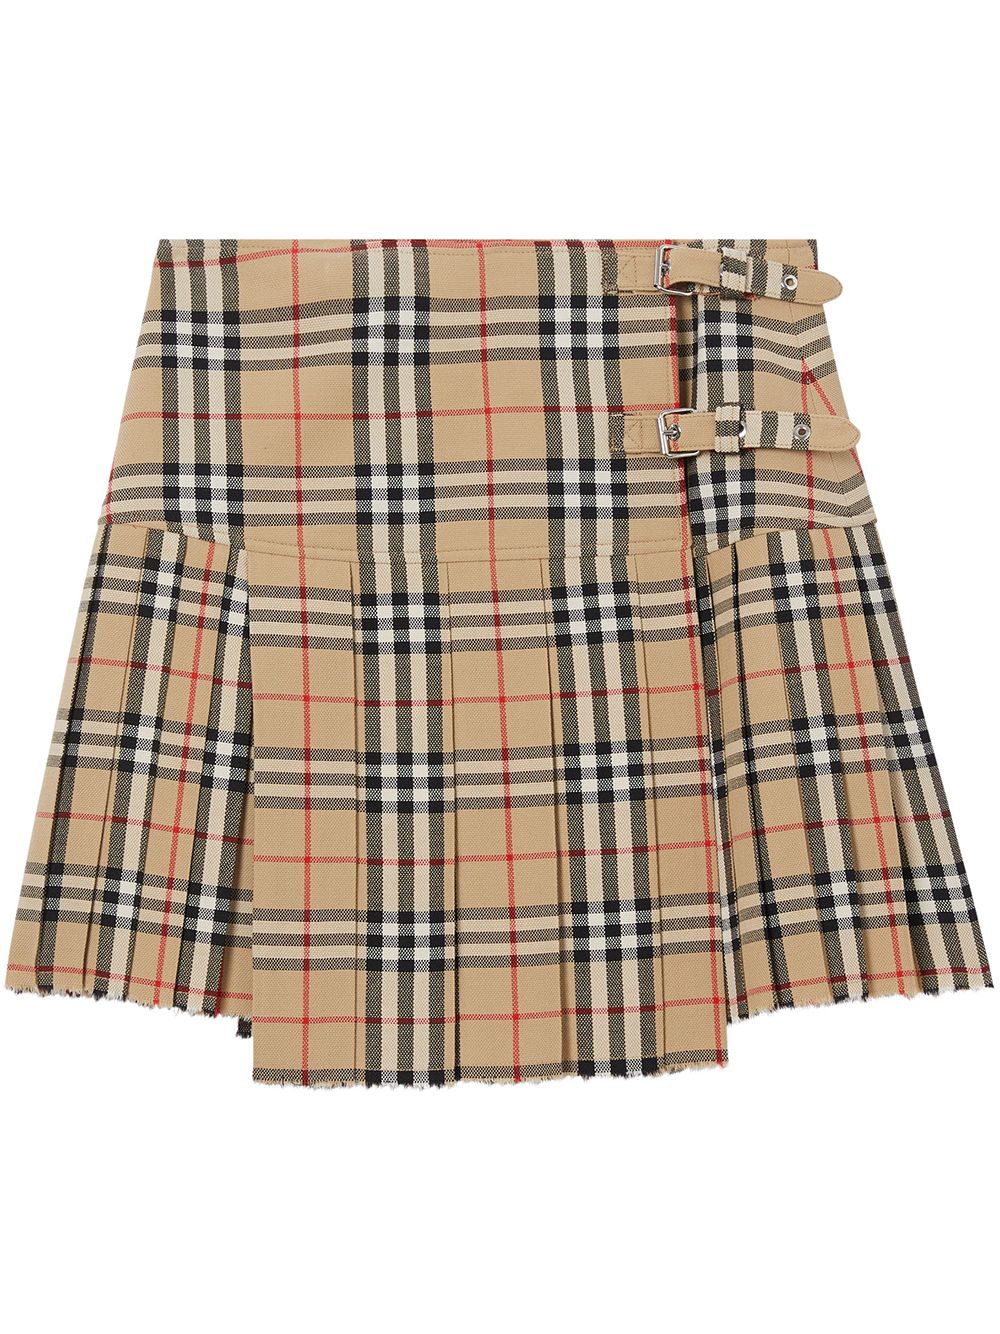 Vintage Check Wool Kilt Skirt - Archive Beige